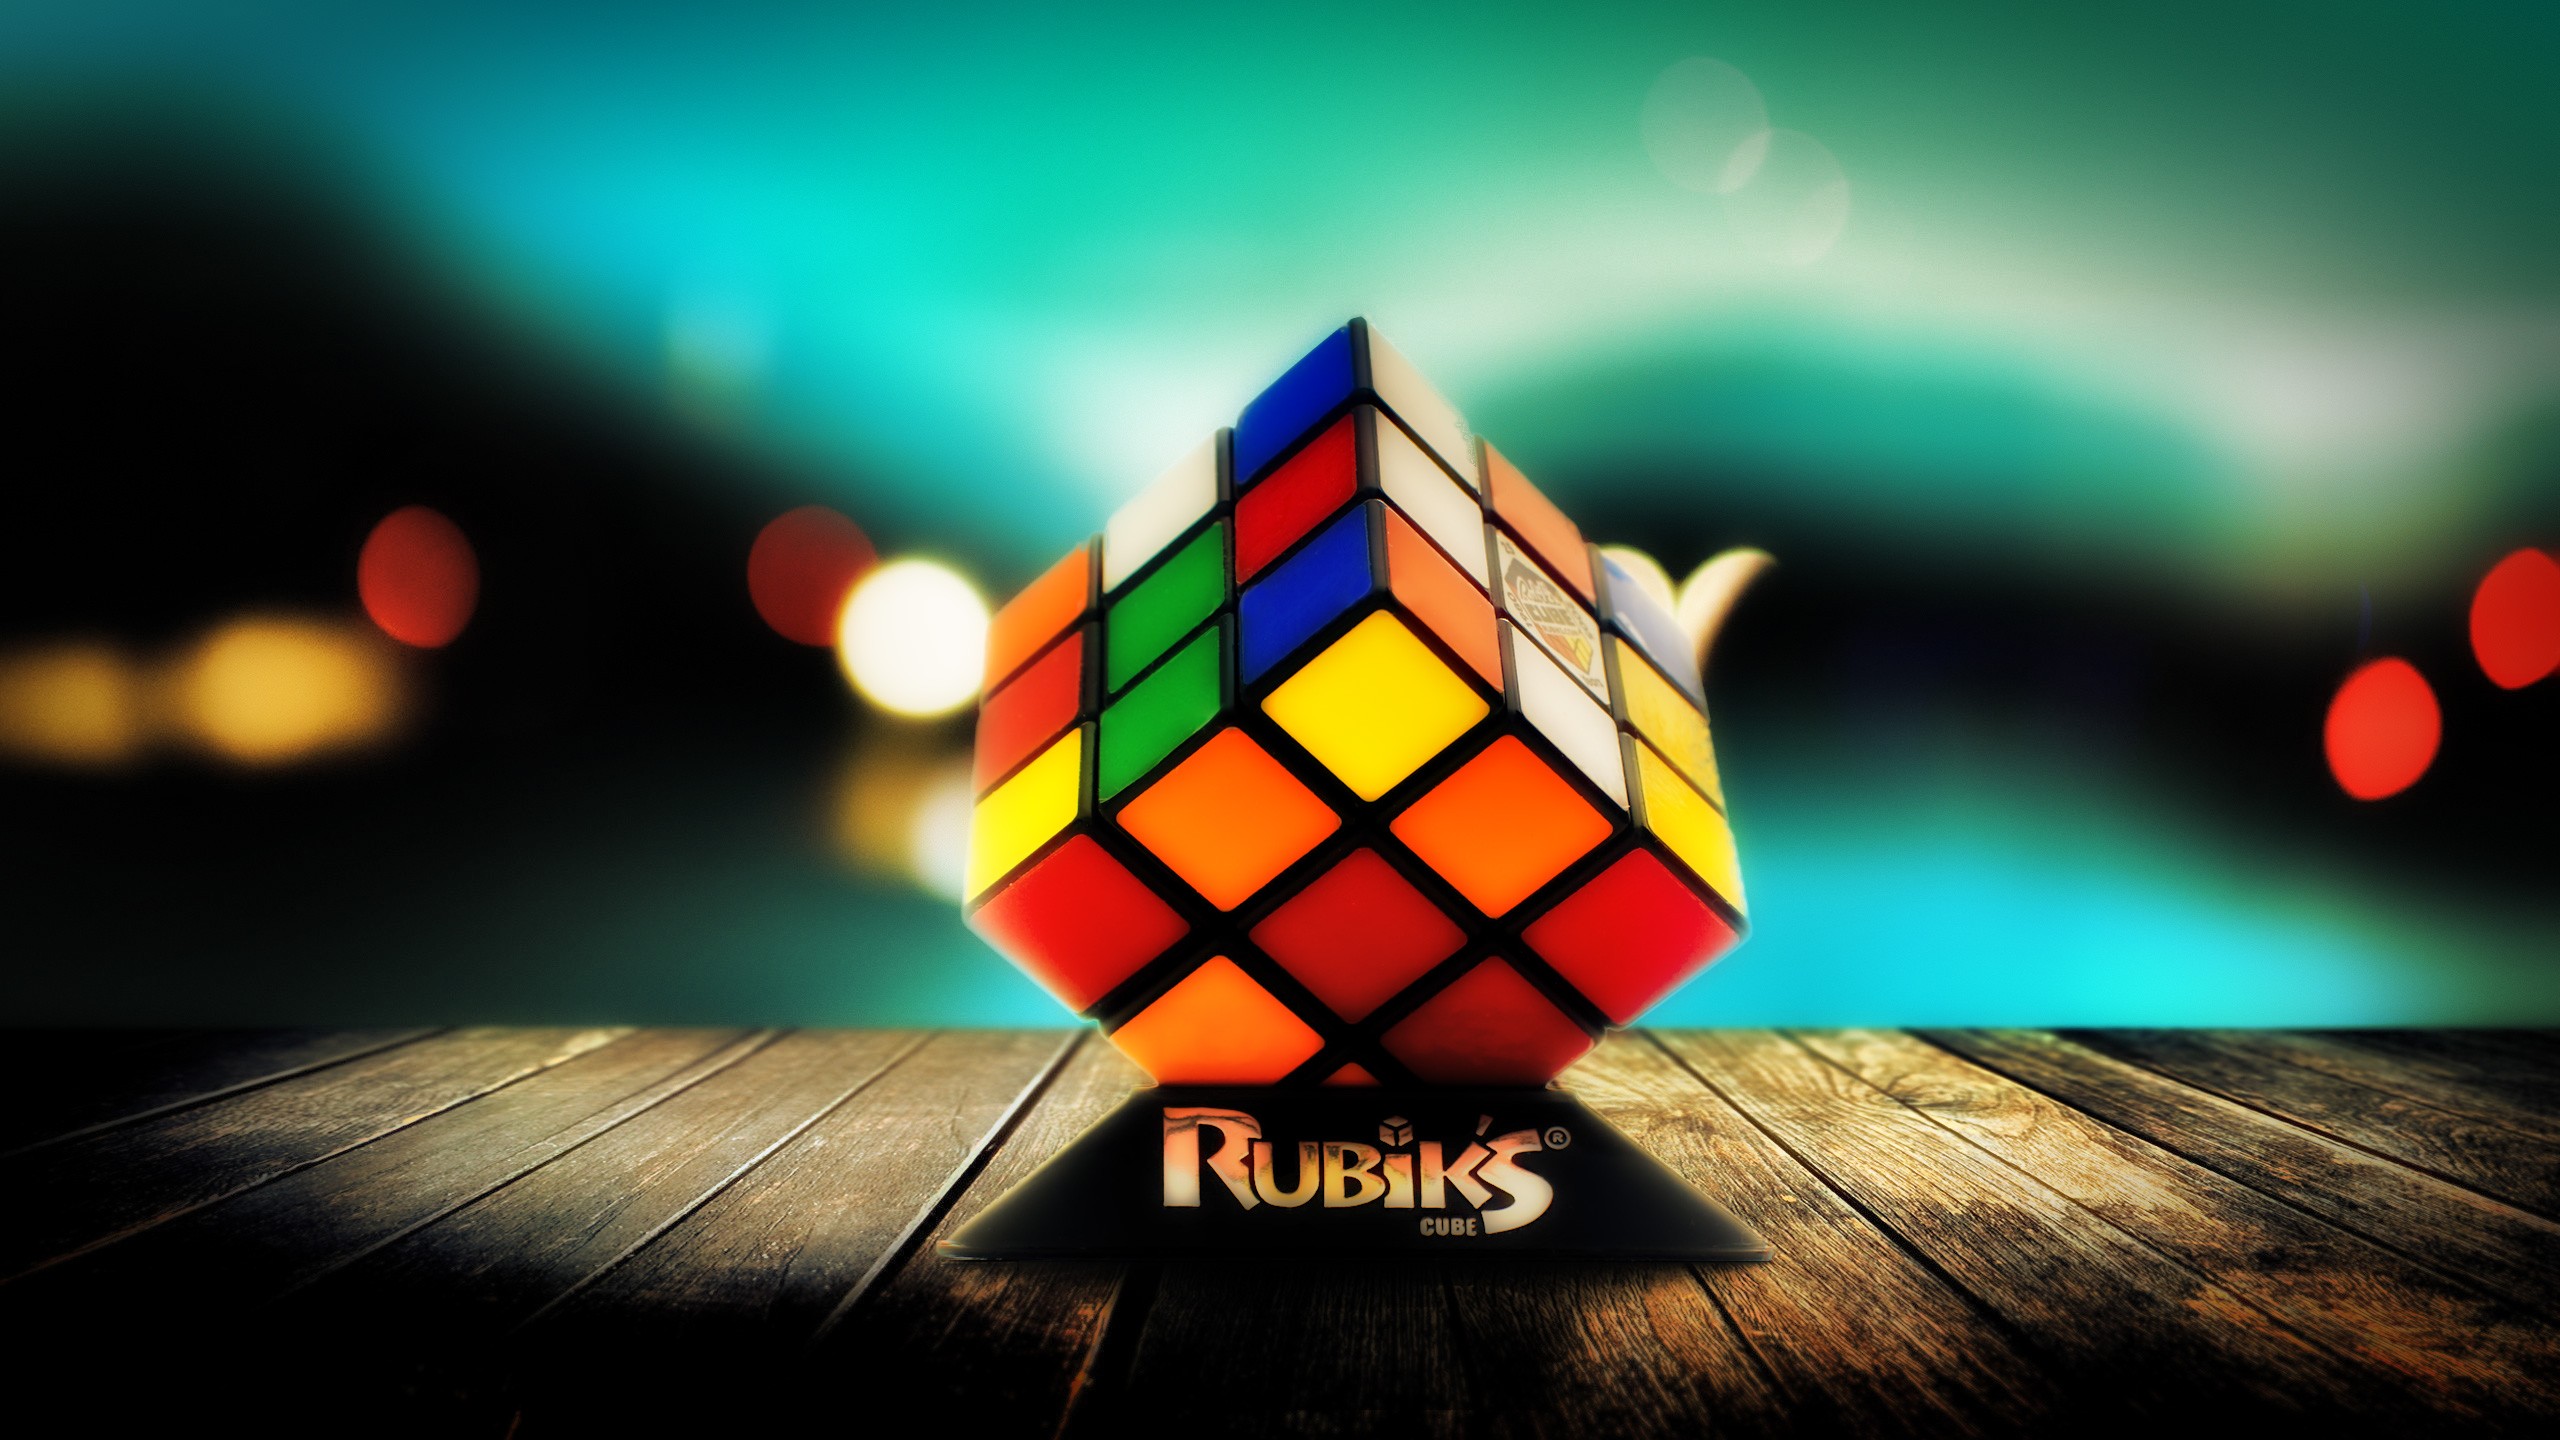 Rubiks 3d Wallpaper Hd Free For Desktop High Quality Rubik S Cube 2560x1440 Wallpaper Teahub Io